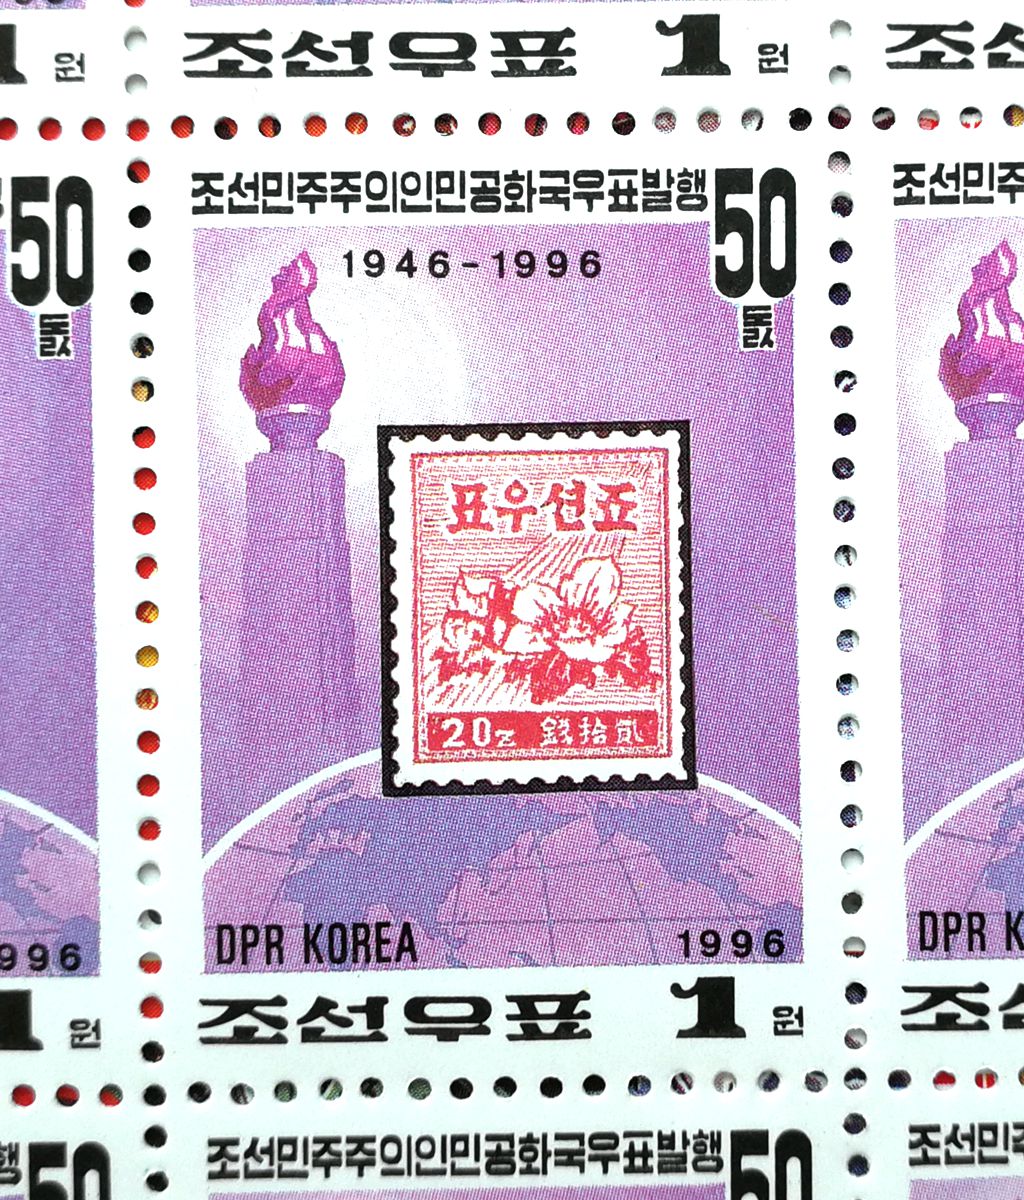 L4552, Korea "50th Years of First Korean Samp", Full Sheet of 78 Pcs Stamps, 1996